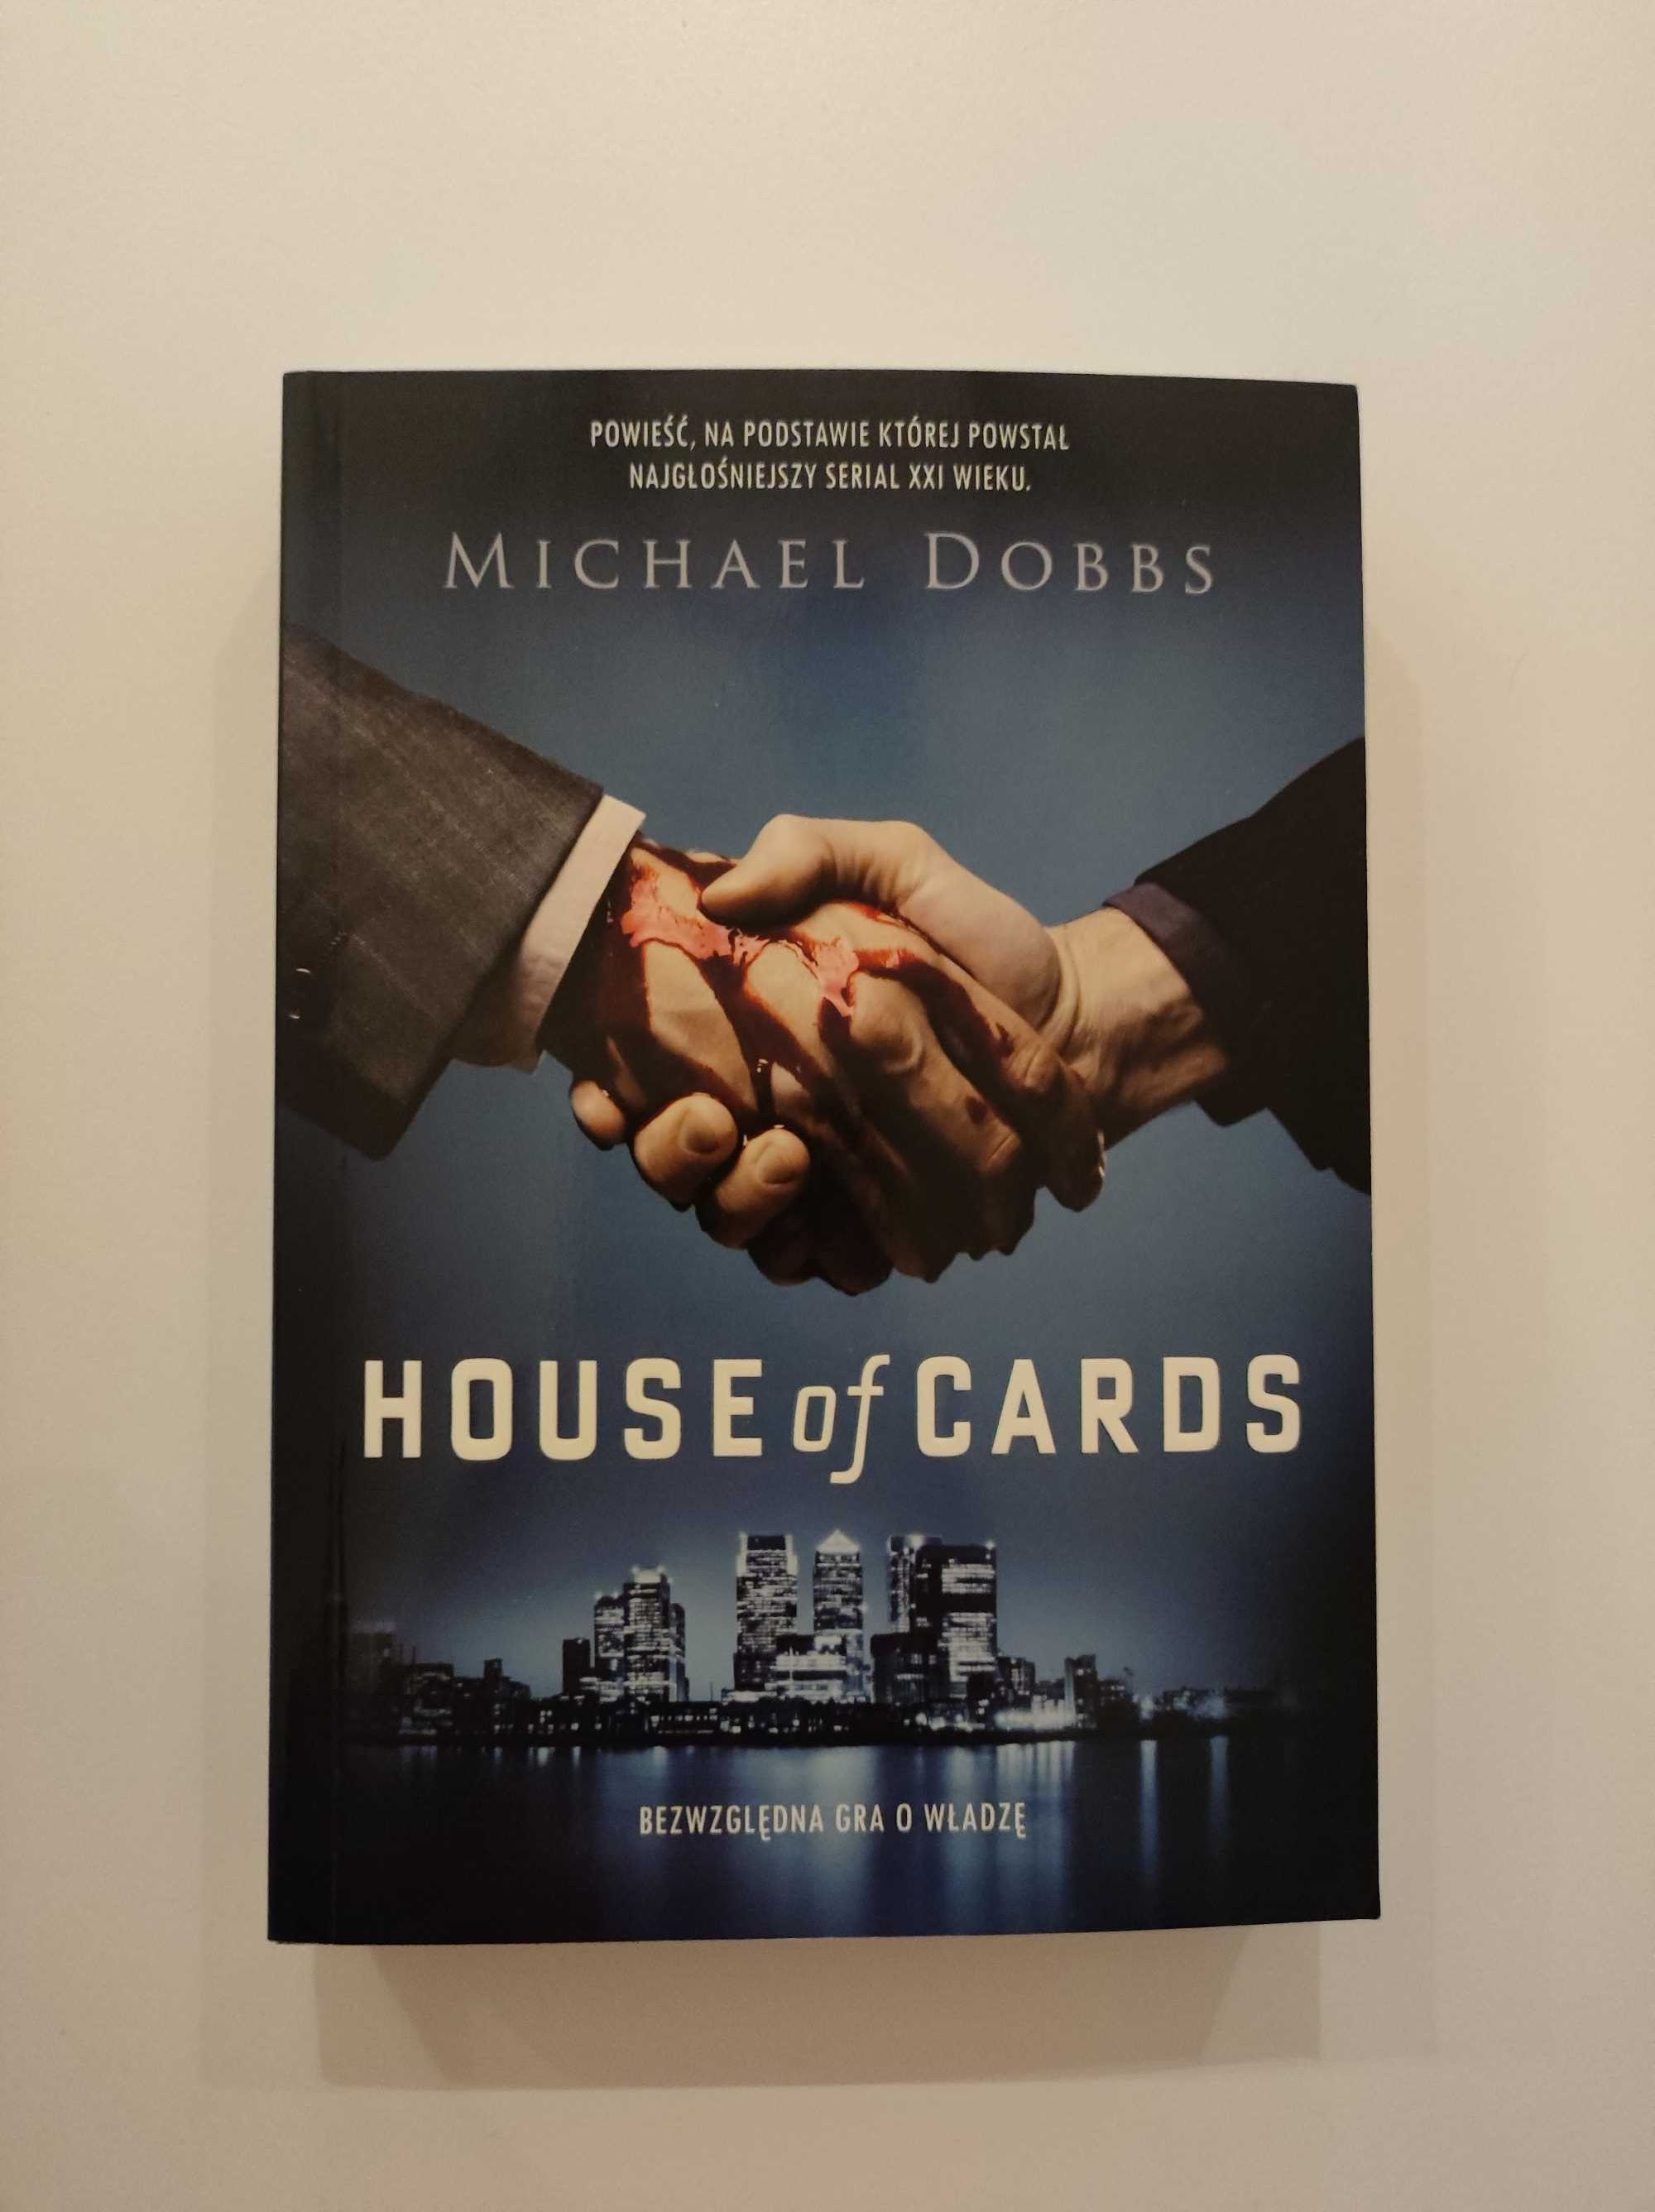 Książka "House of cards" Michael Dobbs